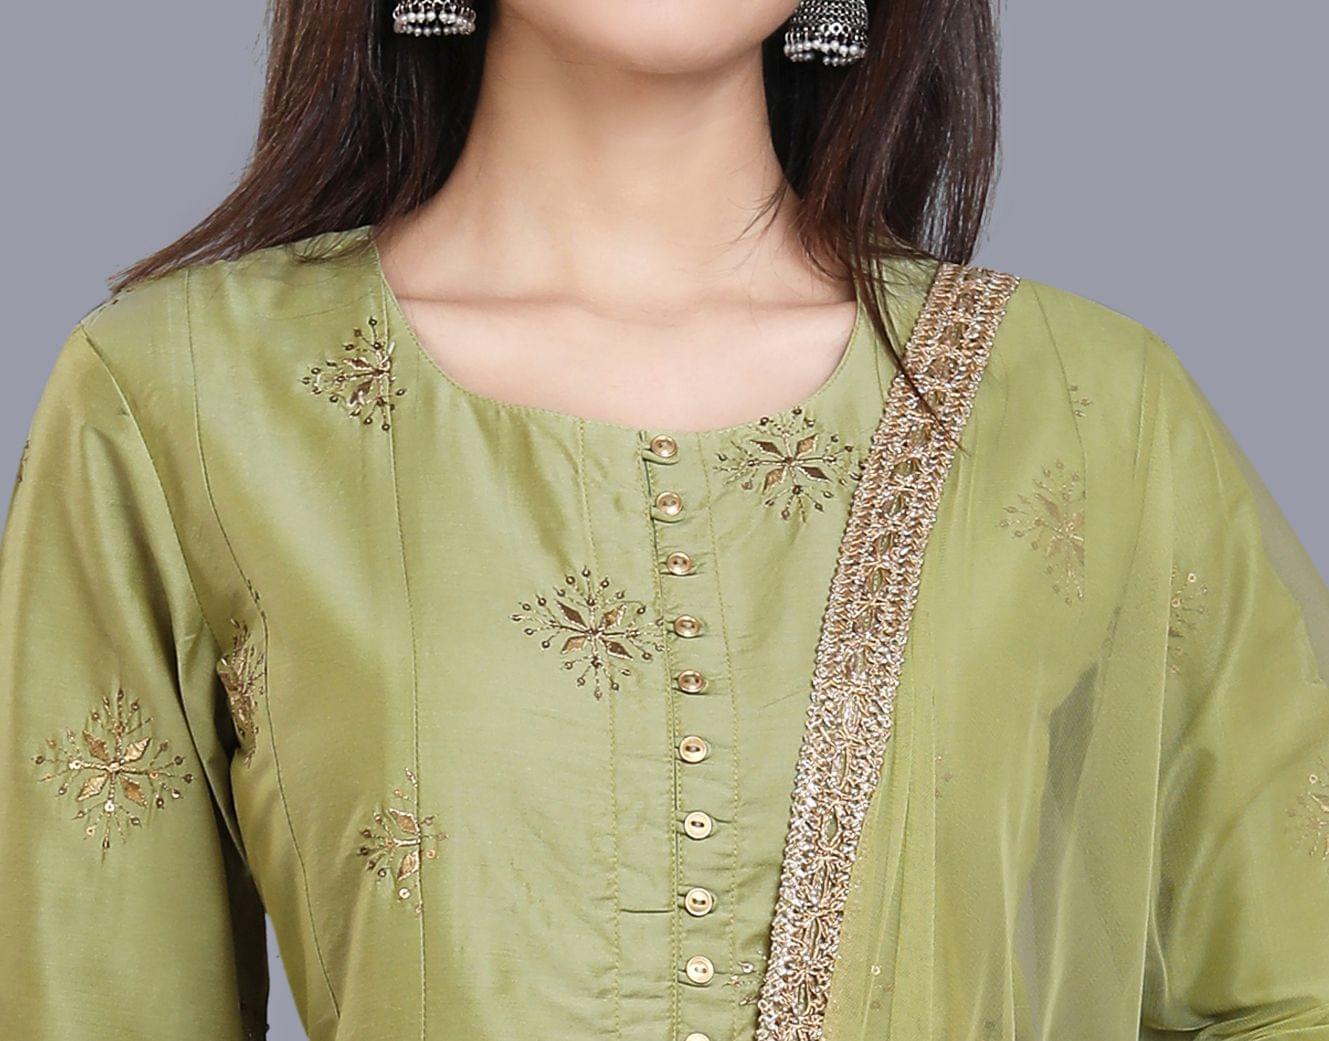 Swarupa Mehandi Green Cotton Silk Embroidered Suit Set